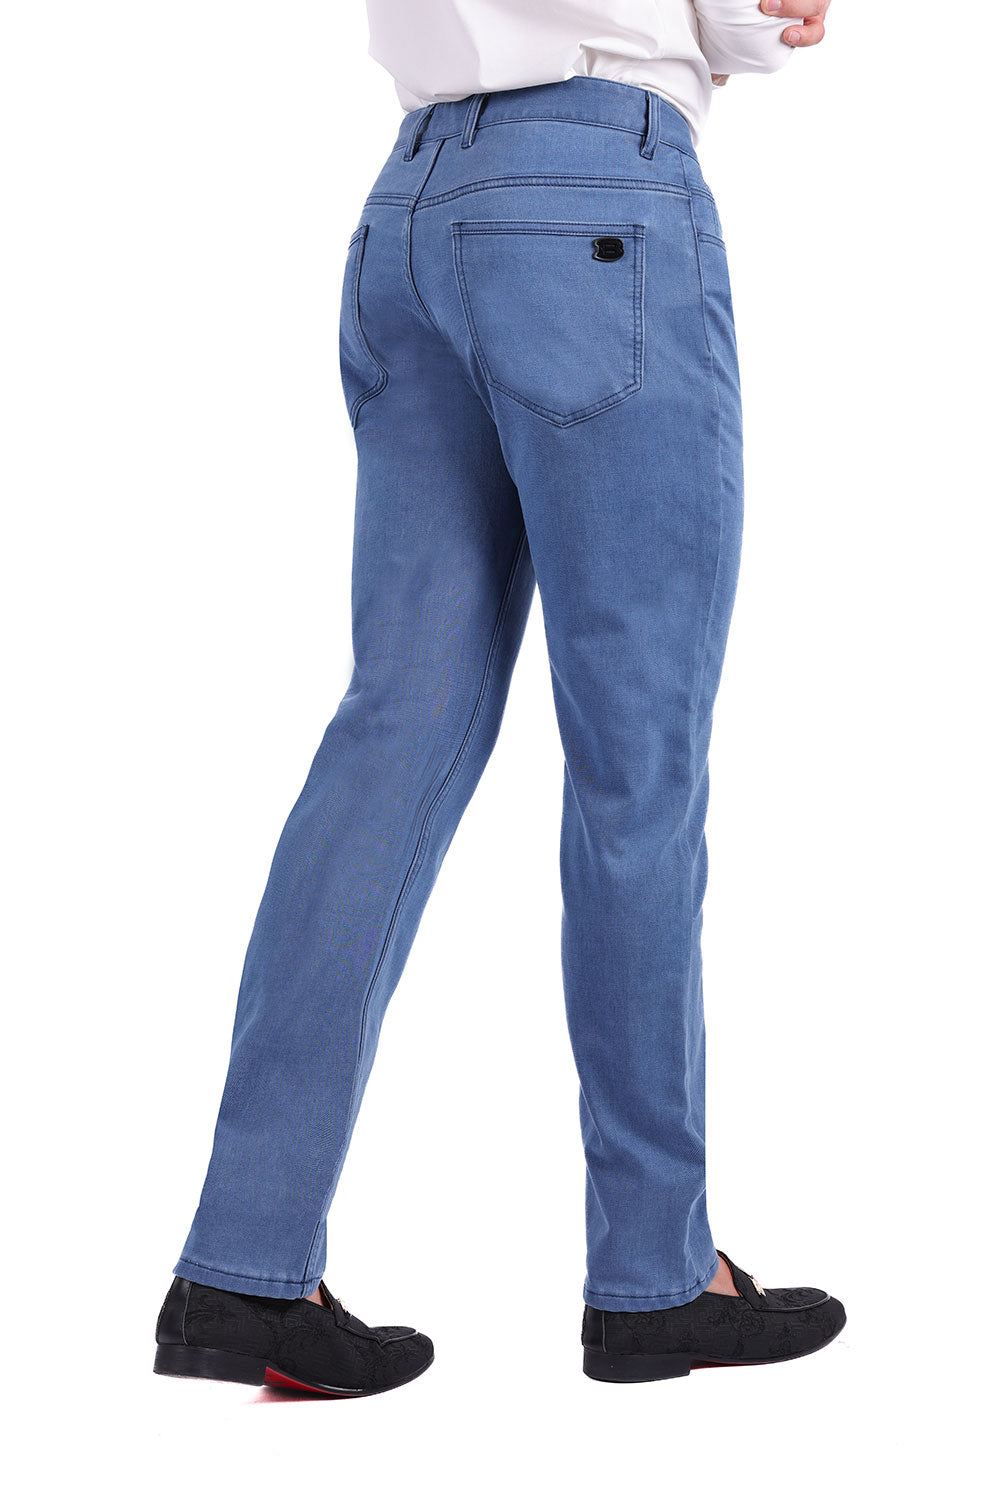 Barabas Men's Solid Color Premium Stretch Denim Jeans 3SN100 Light Blue